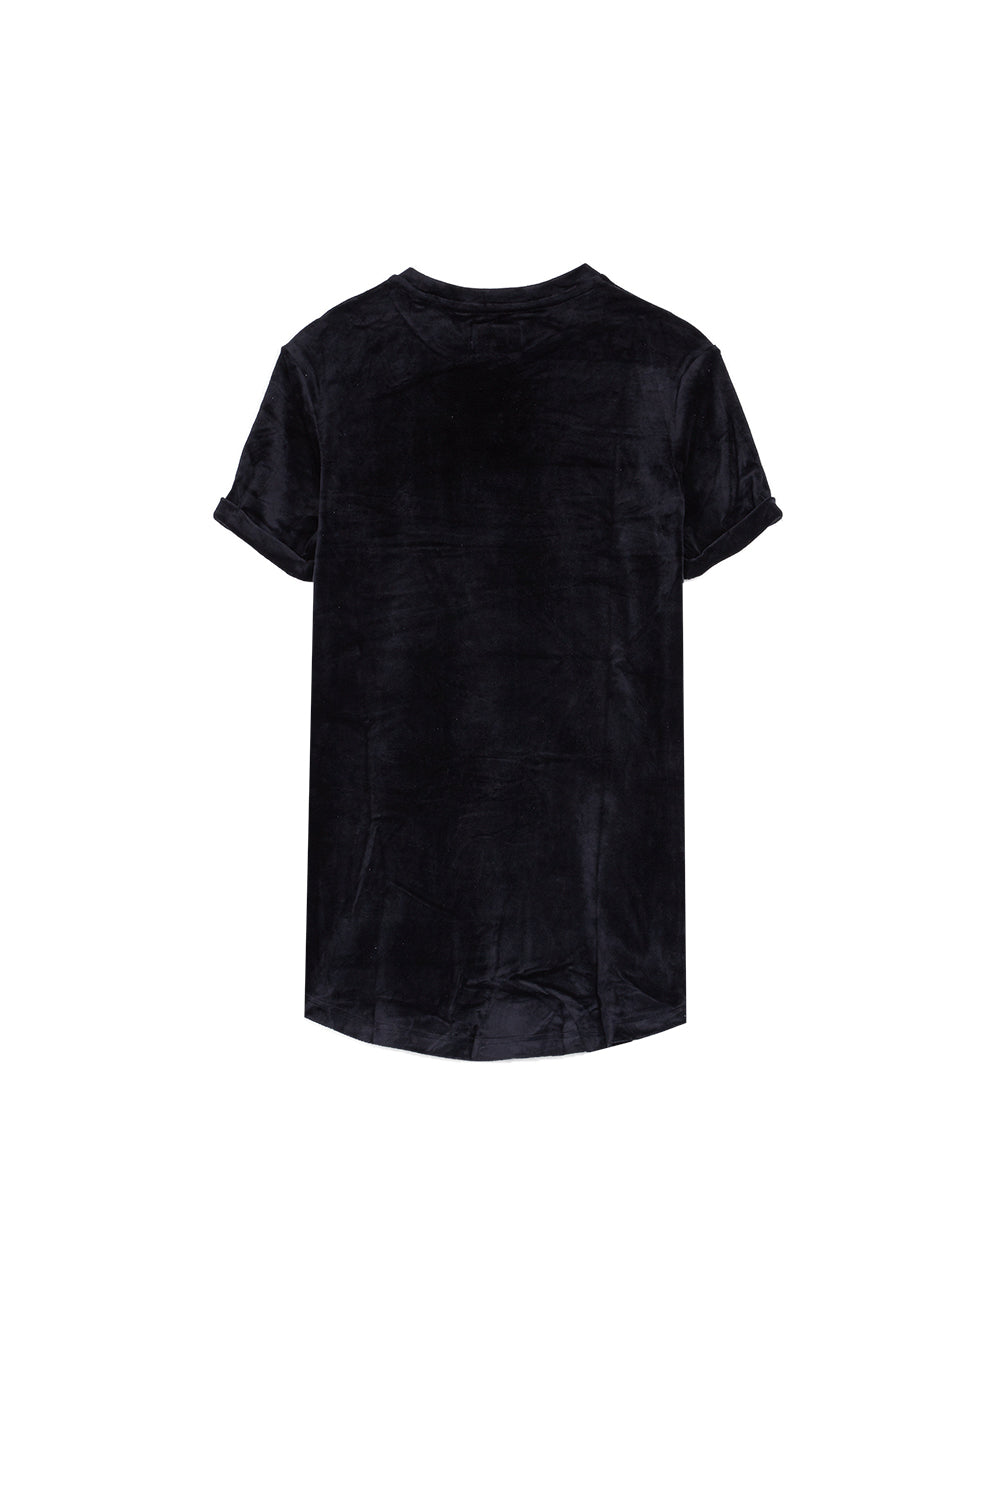 Sixth June - T-shirt velours logo racing noir